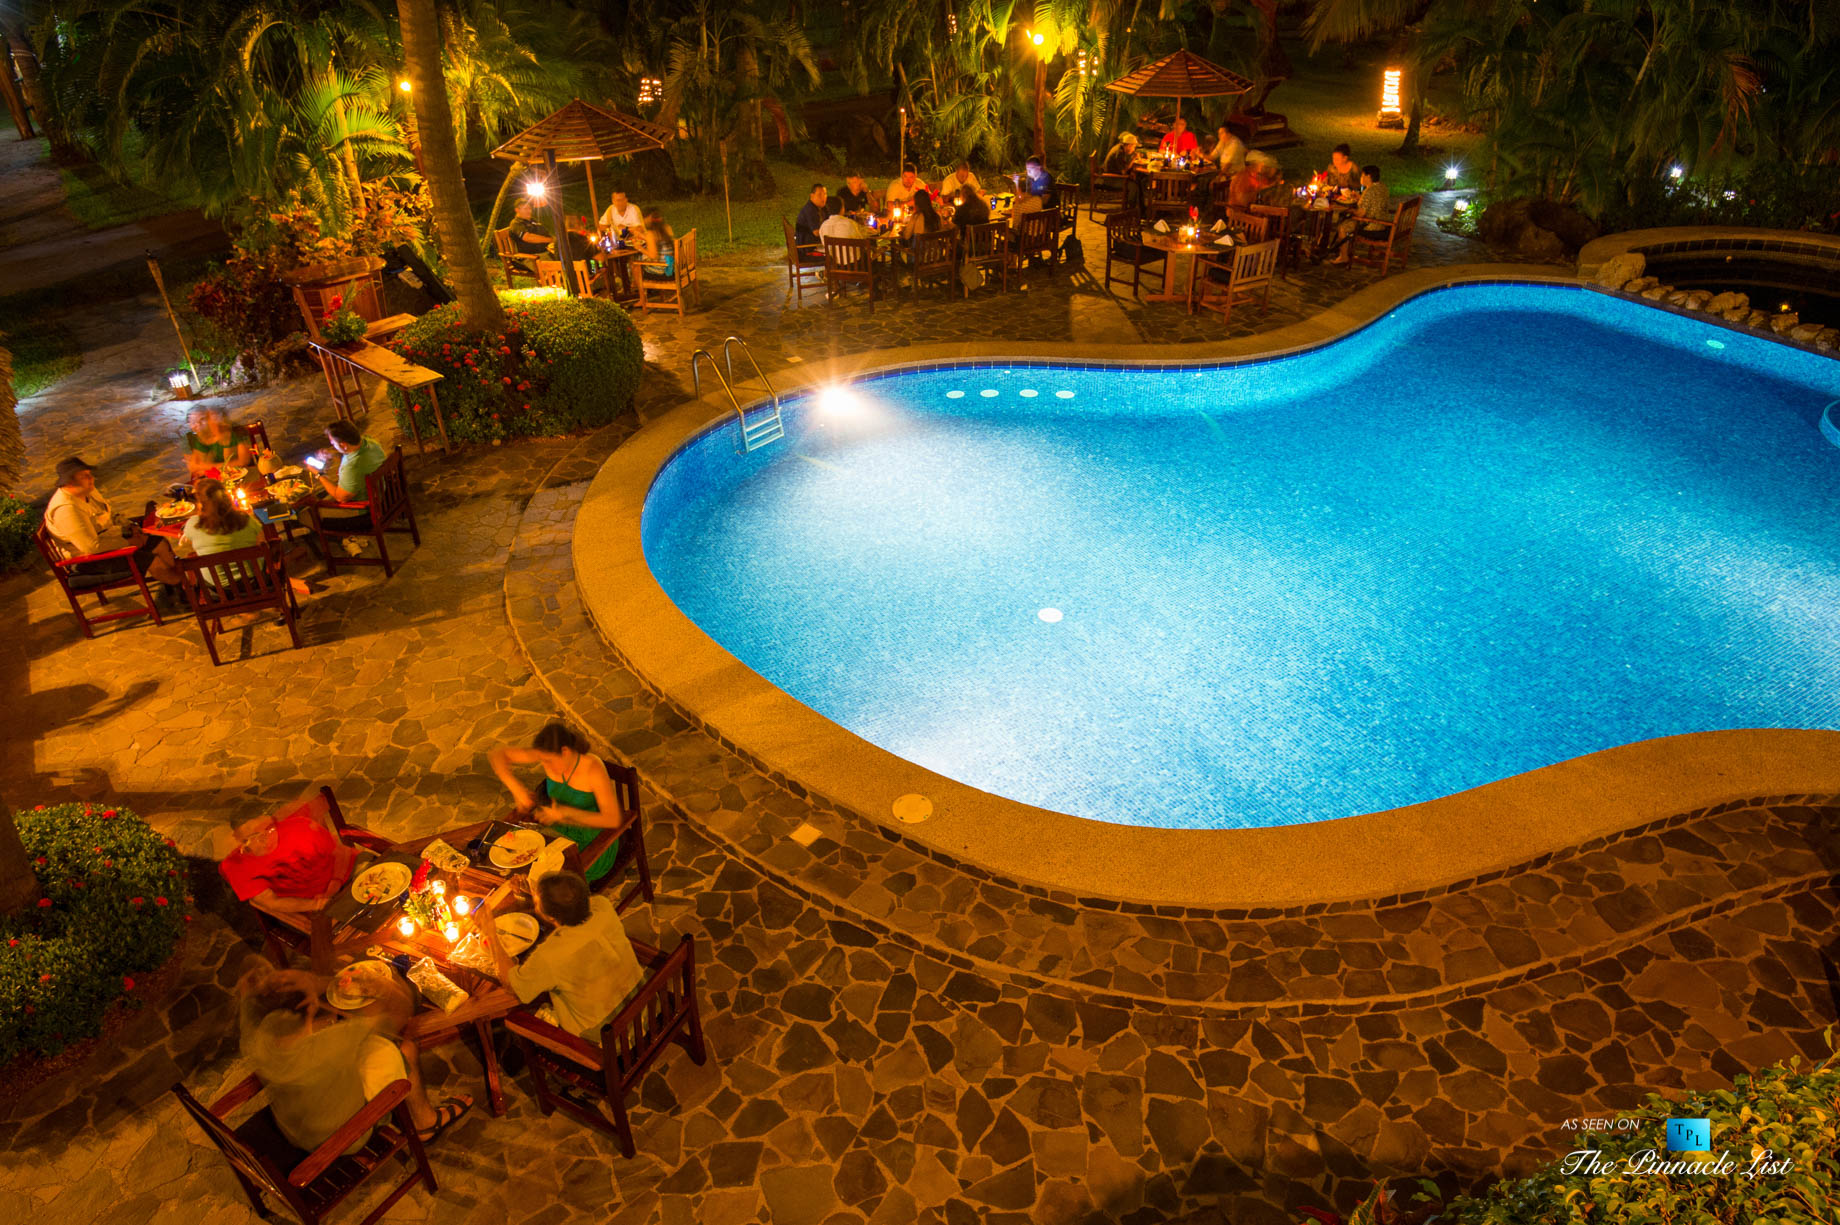 Tambor Tropical Beach Resort - Tambor, Puntarenas, Costa Rica - Poolside Restaurant Dining at Night